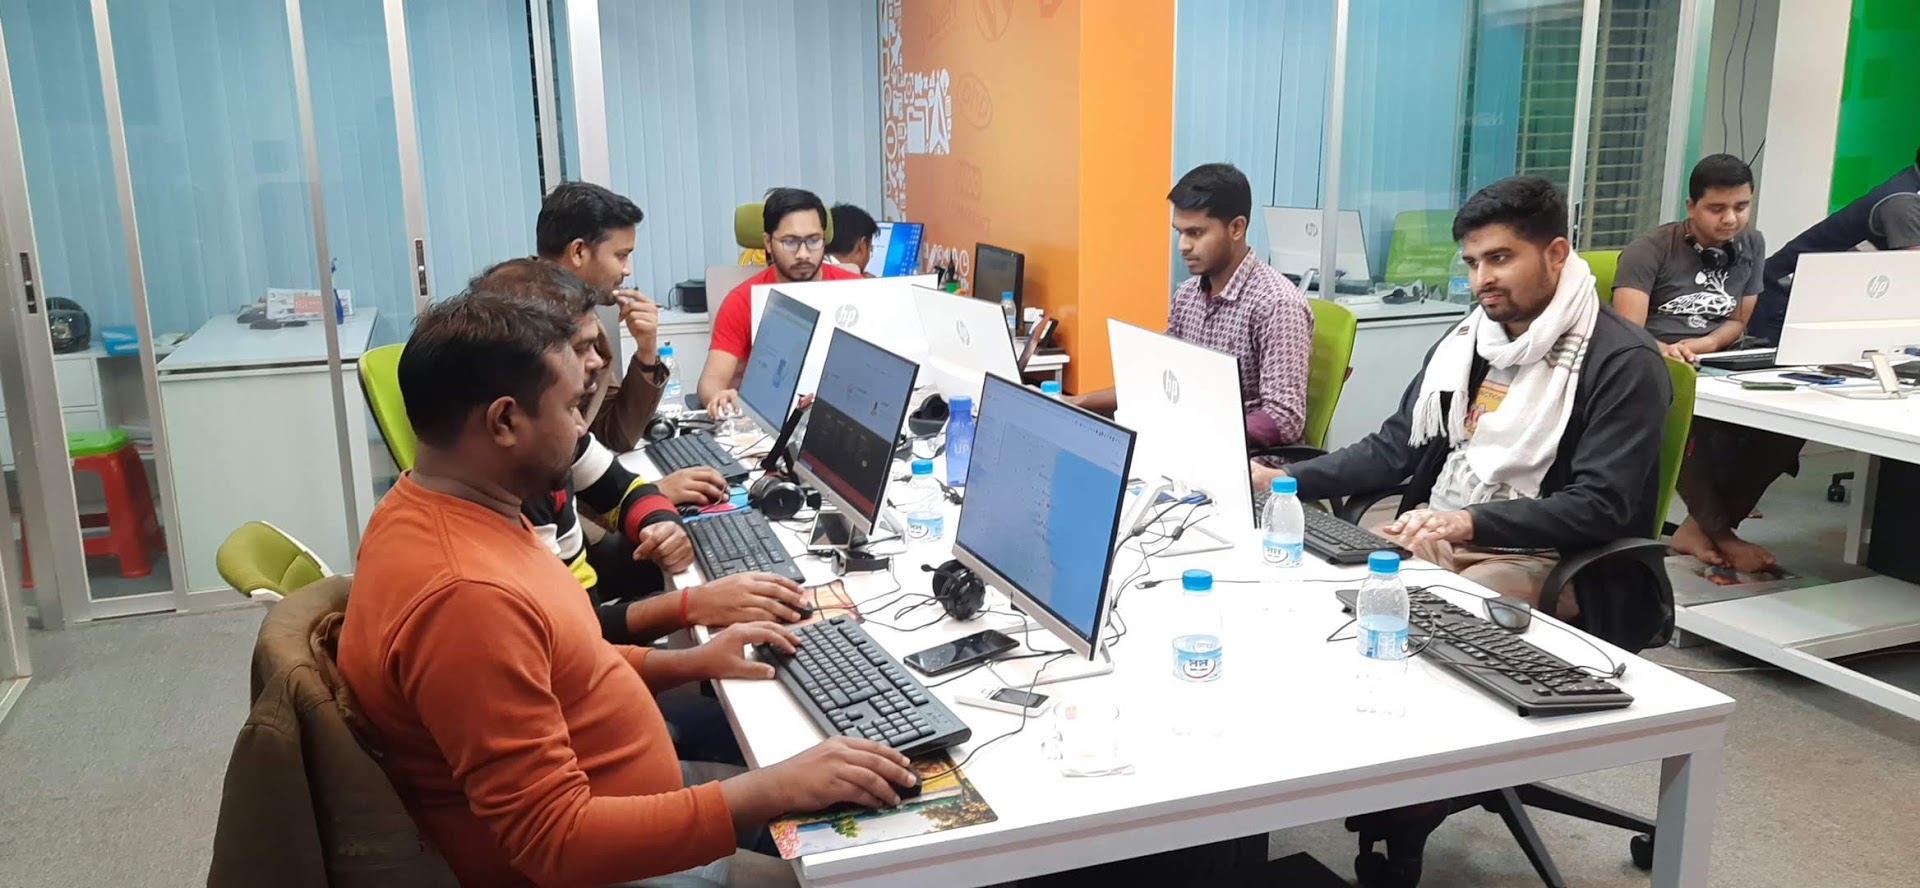 web development company in bangladesh